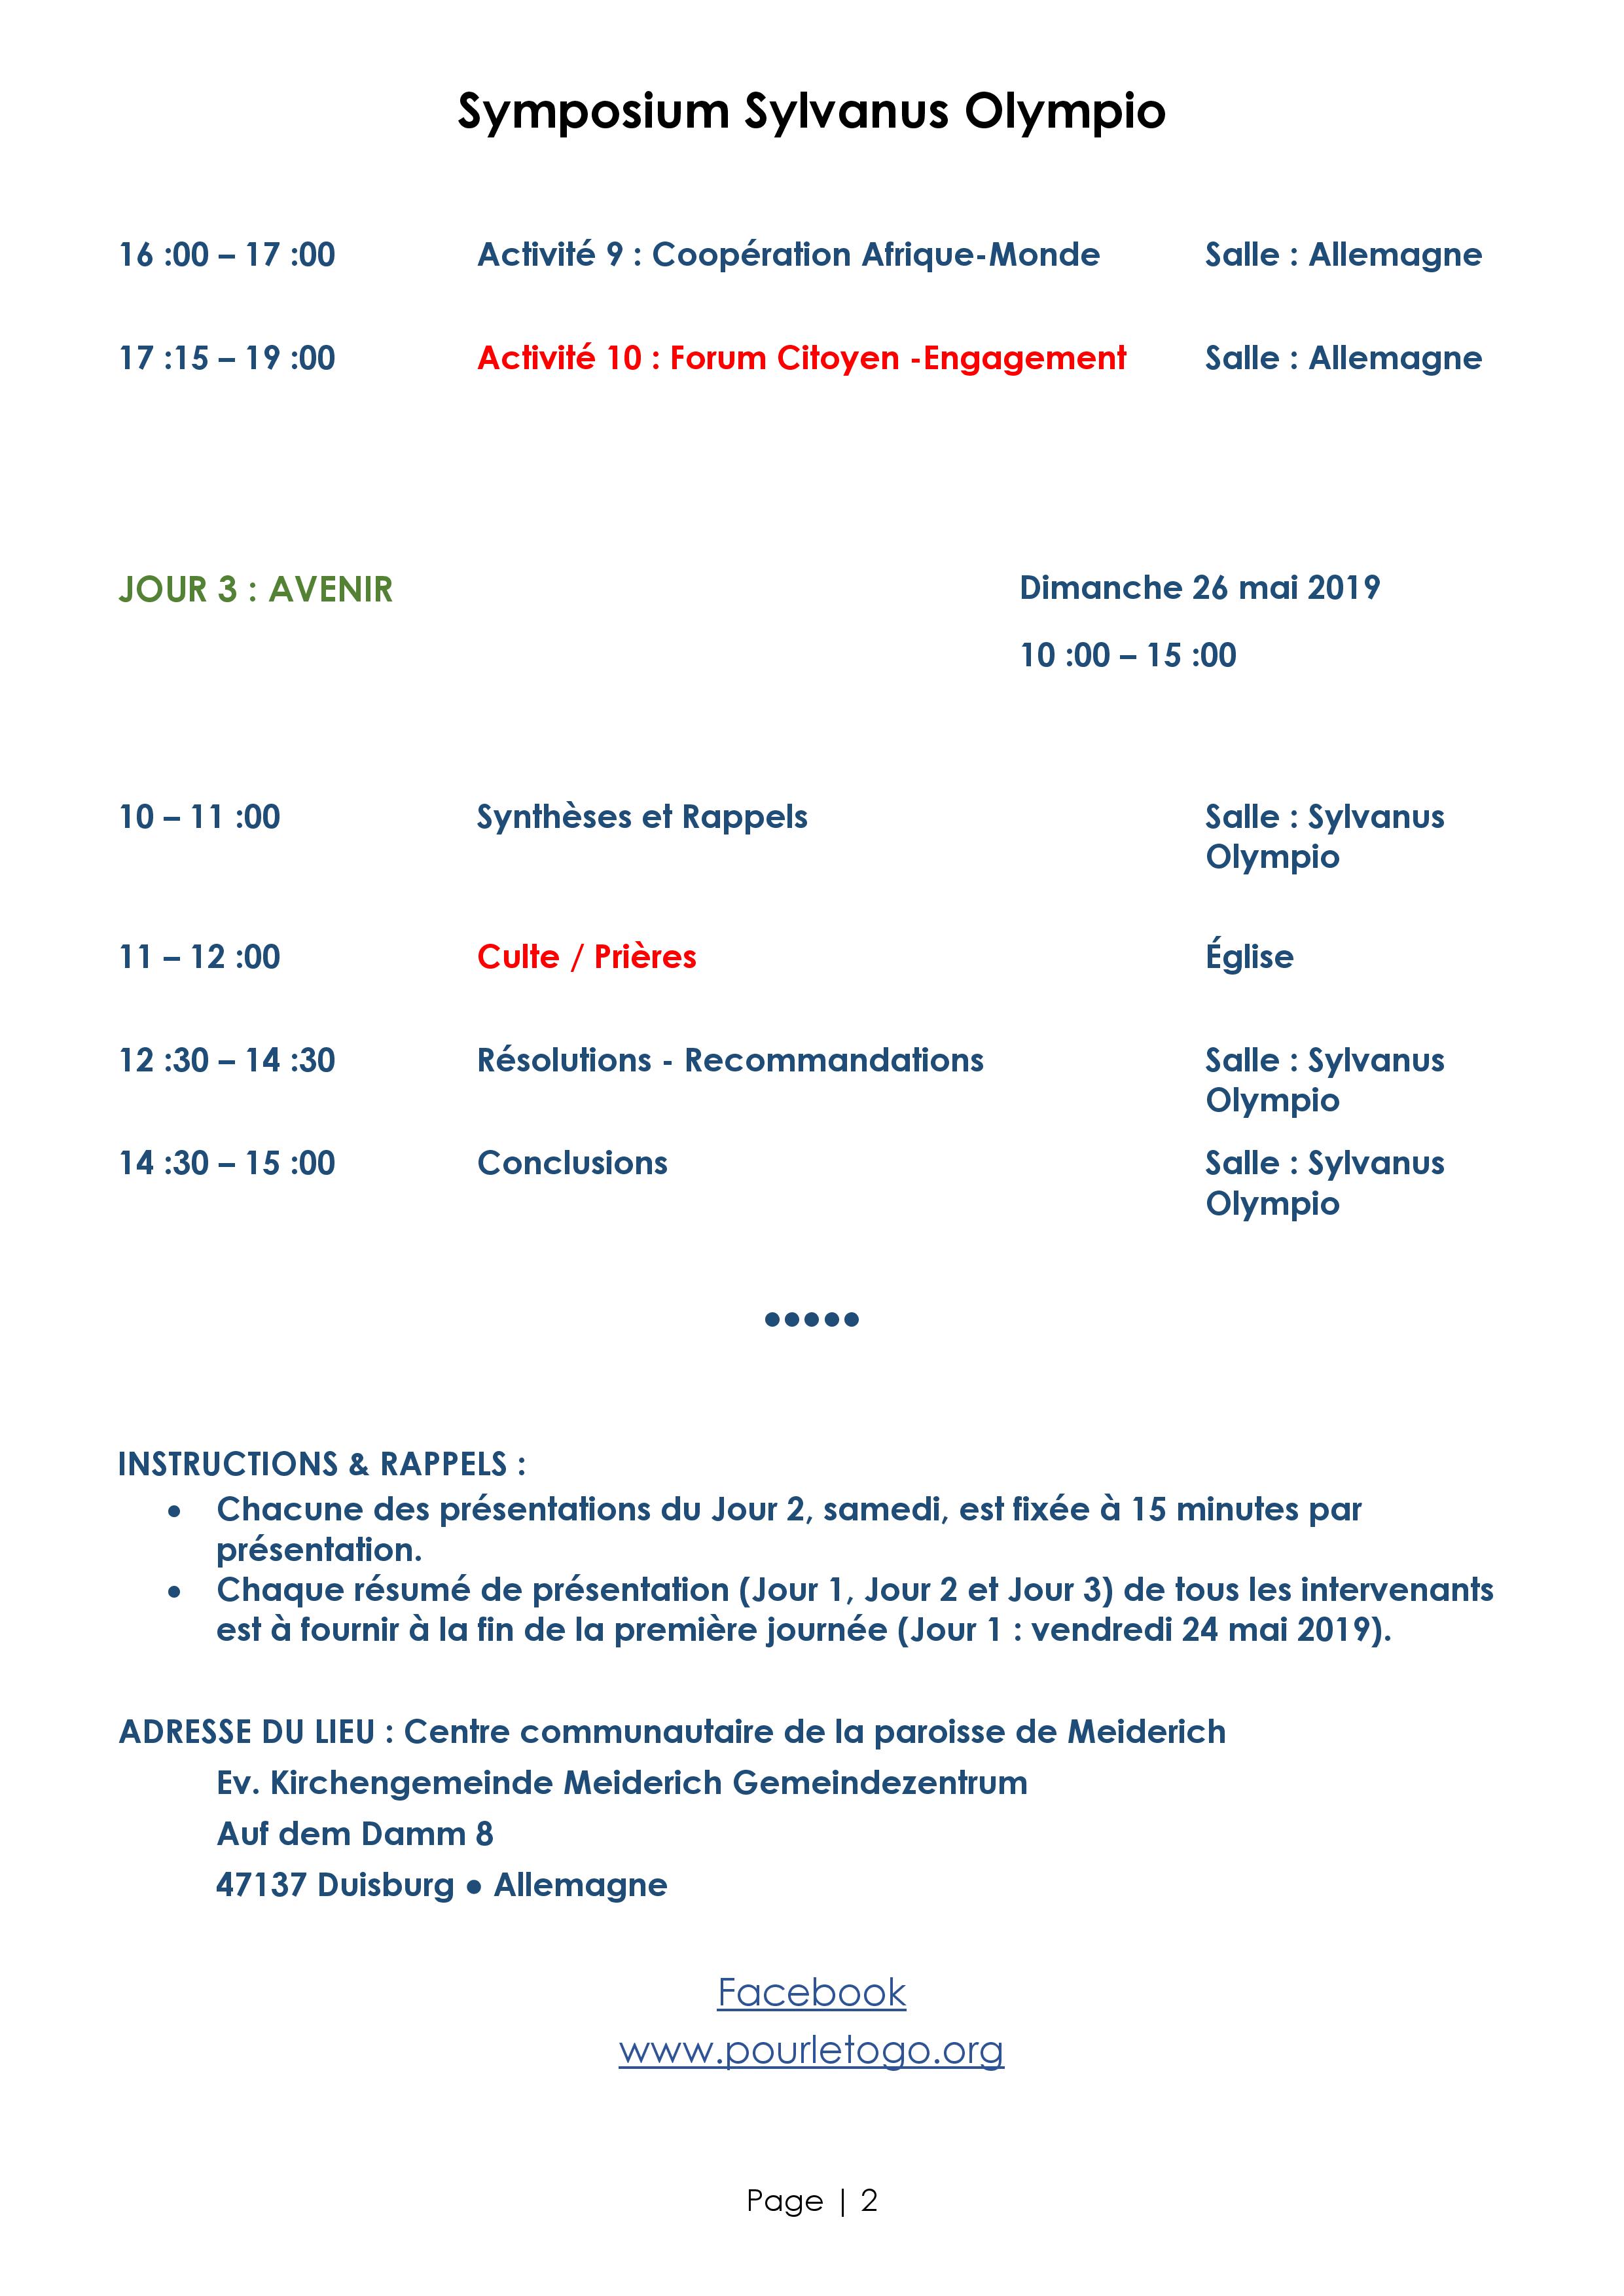 Symposium Sylvanus Olympio - Programme Préliminaire